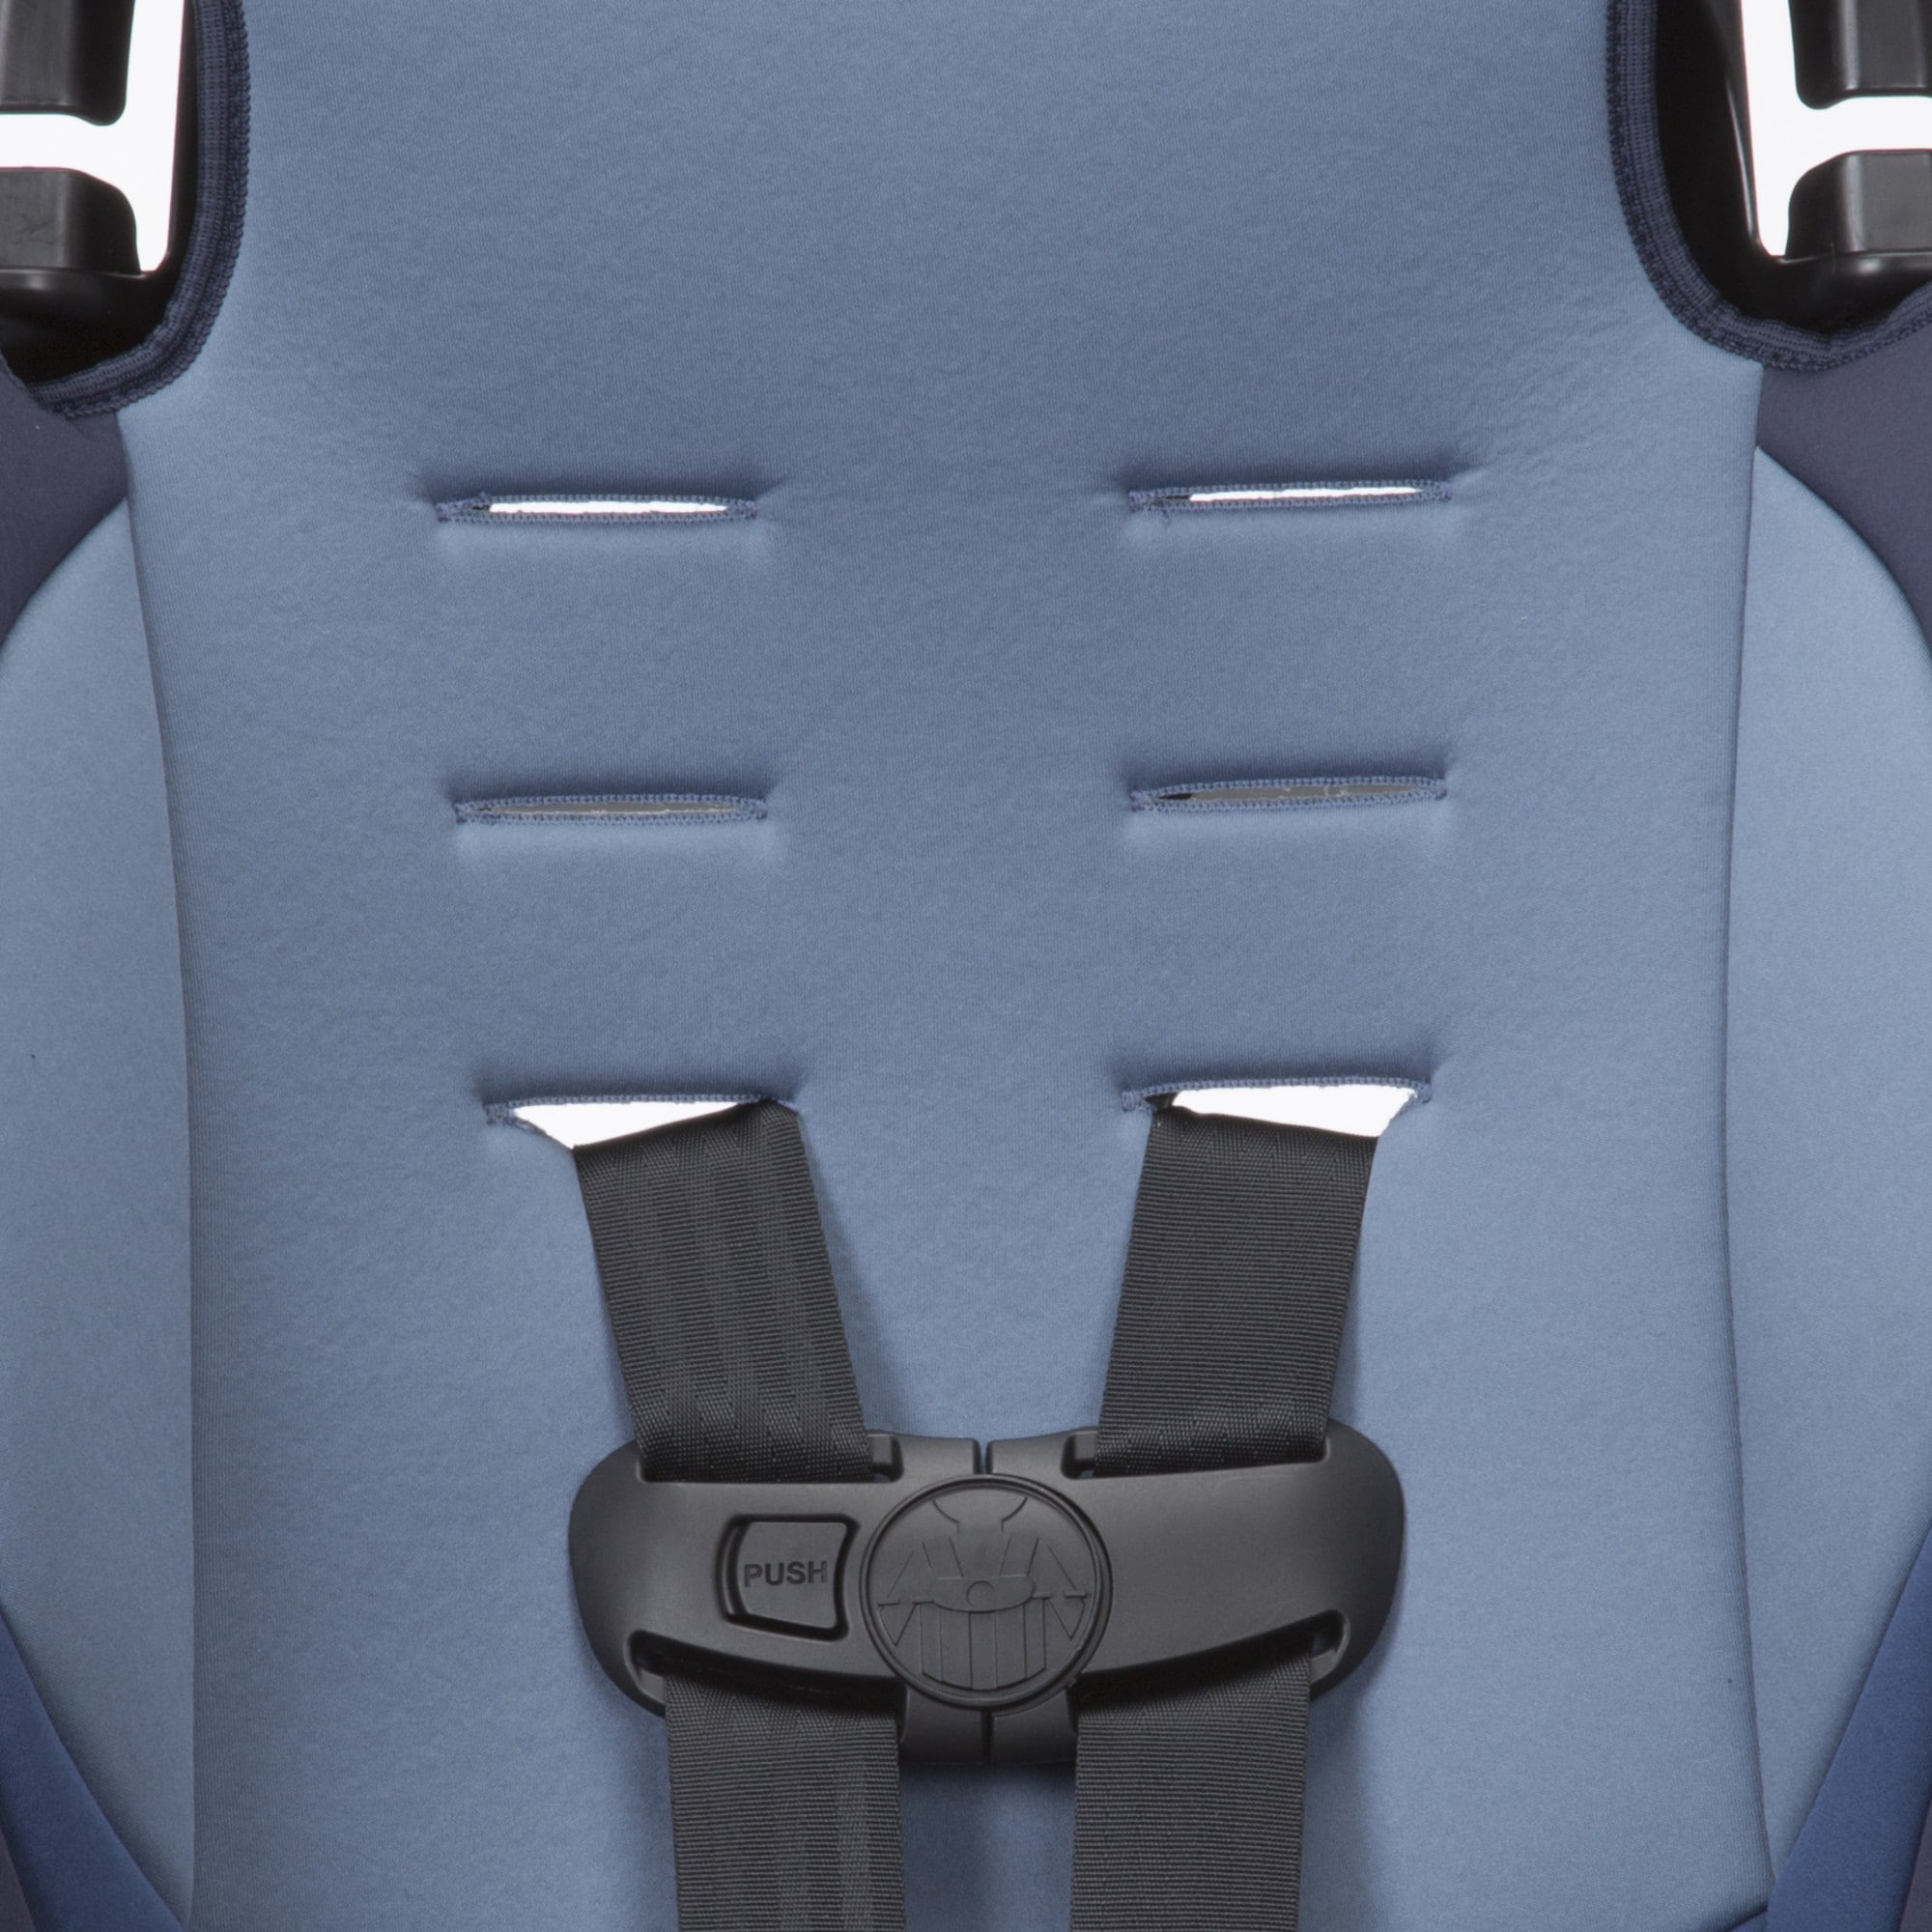 cosco car seat blue